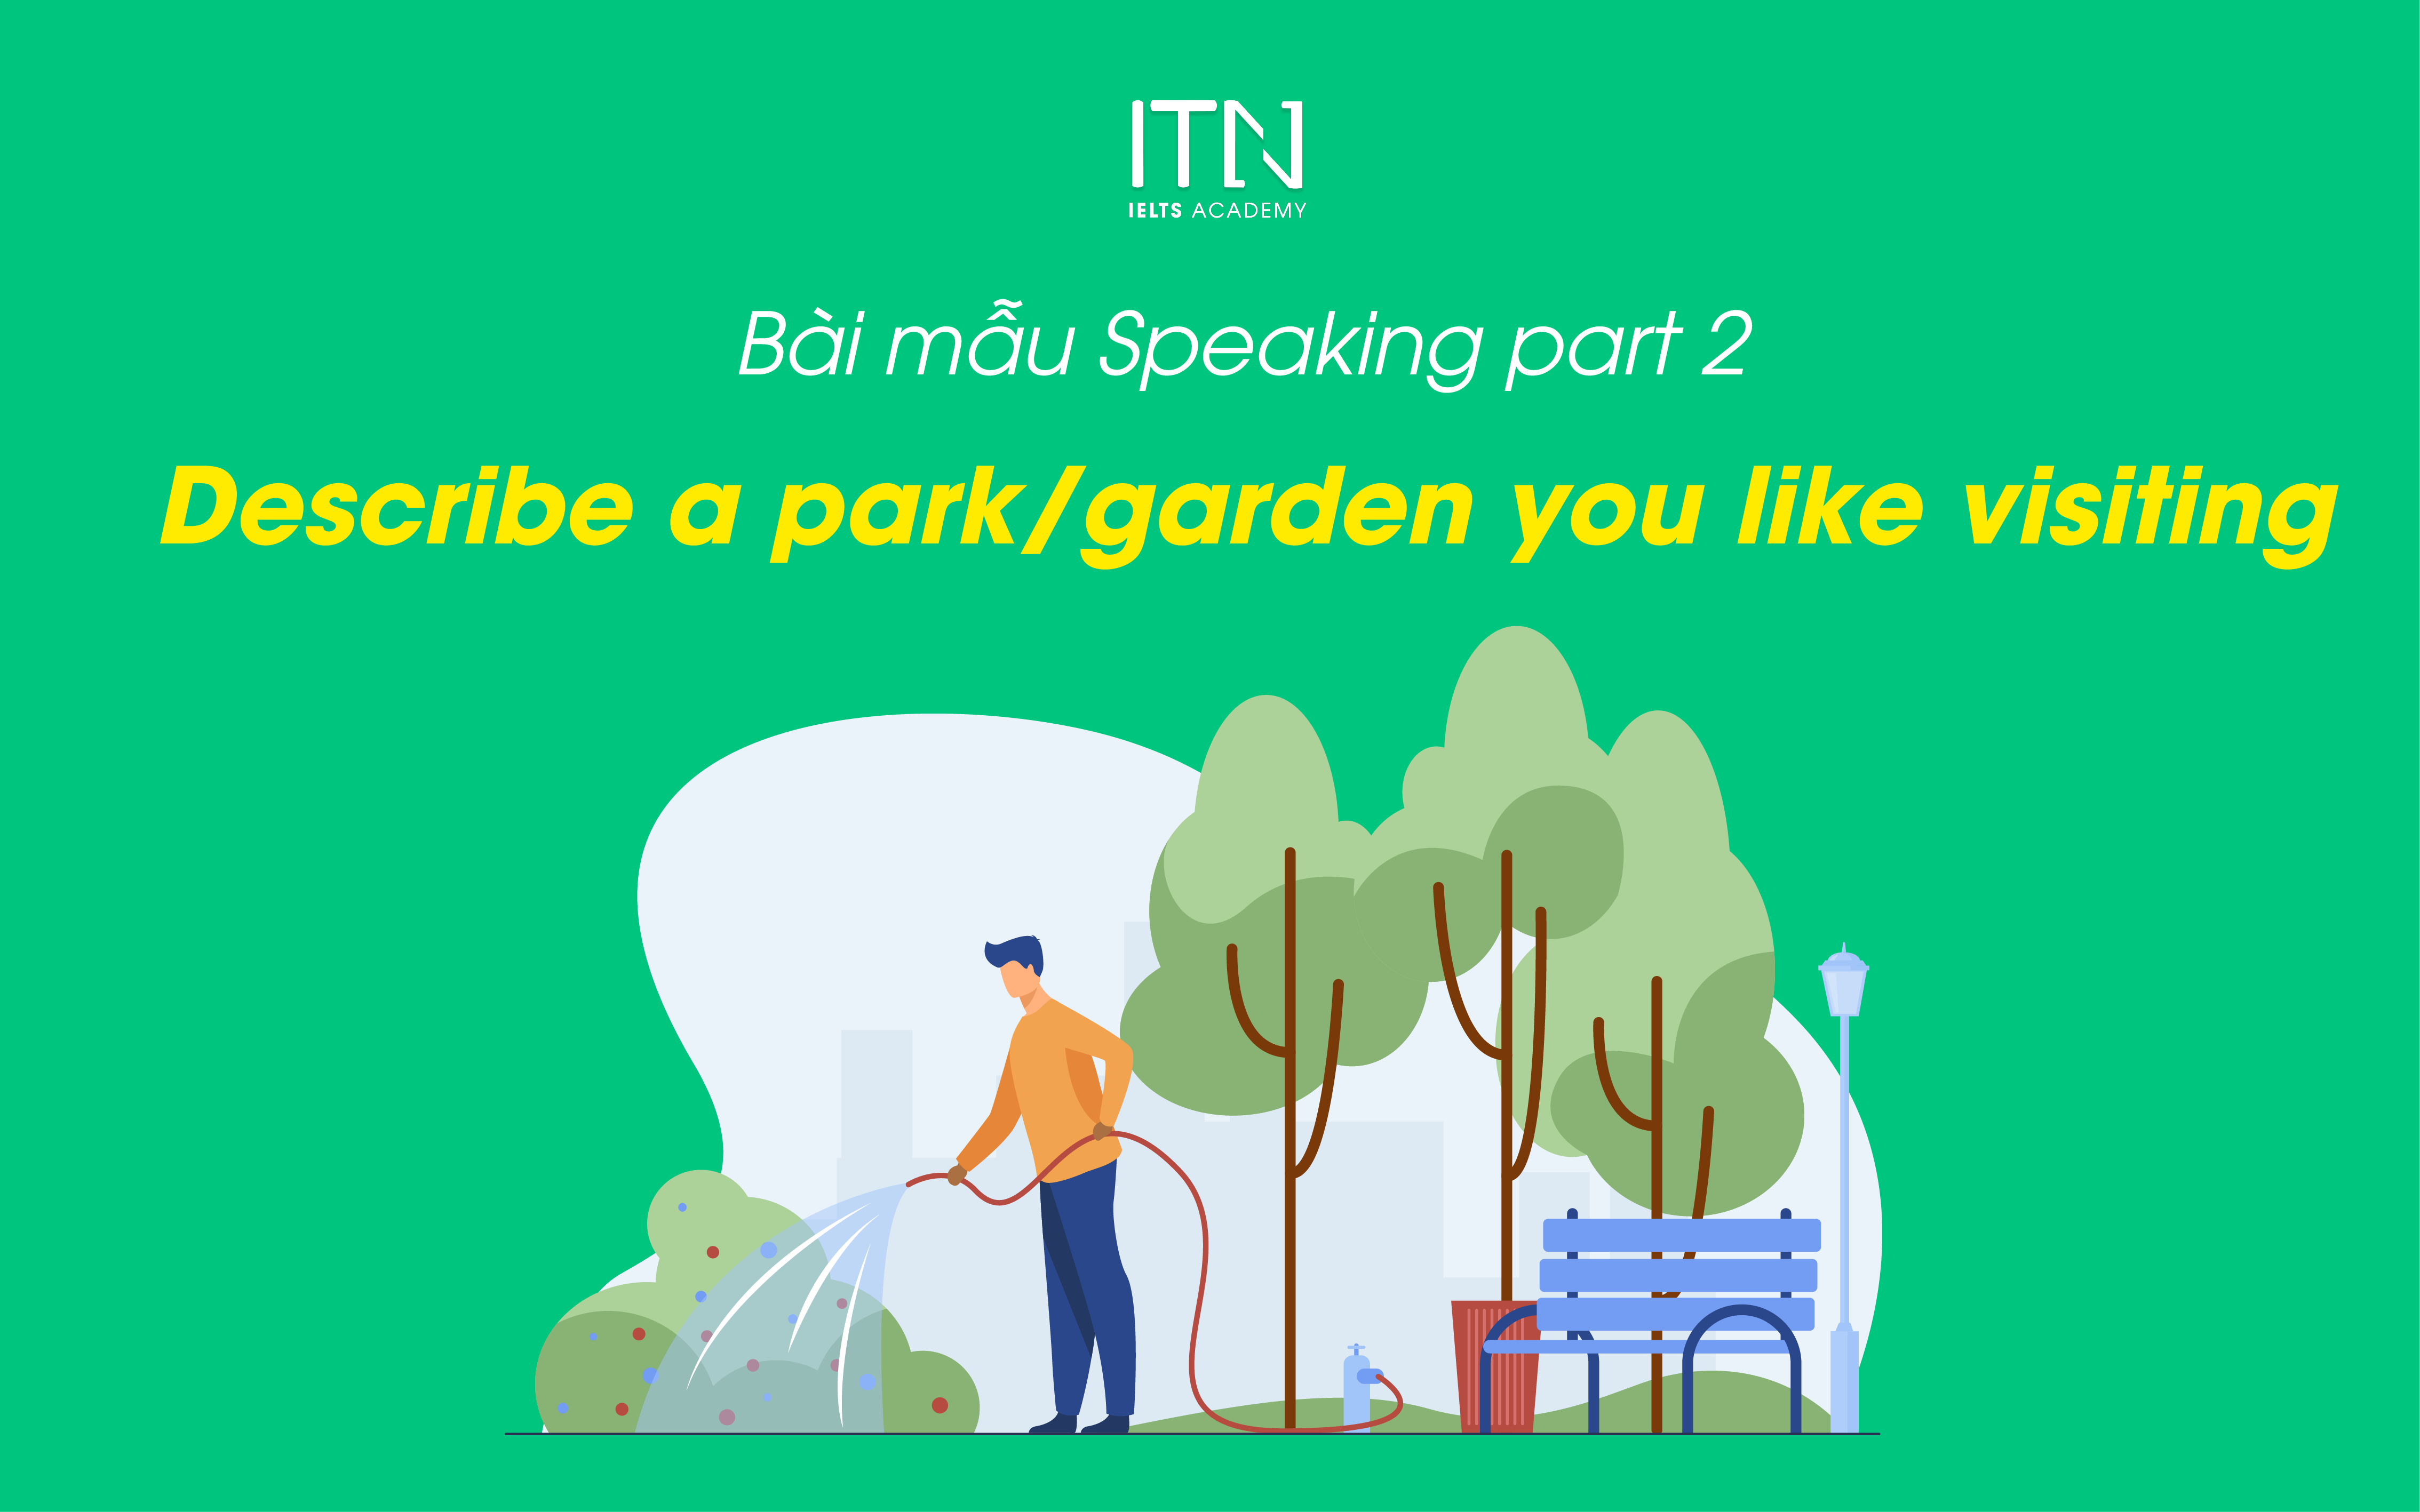 Describe A Park/Garden You Like Visiting - Bài Mẫu Speaking Part 2